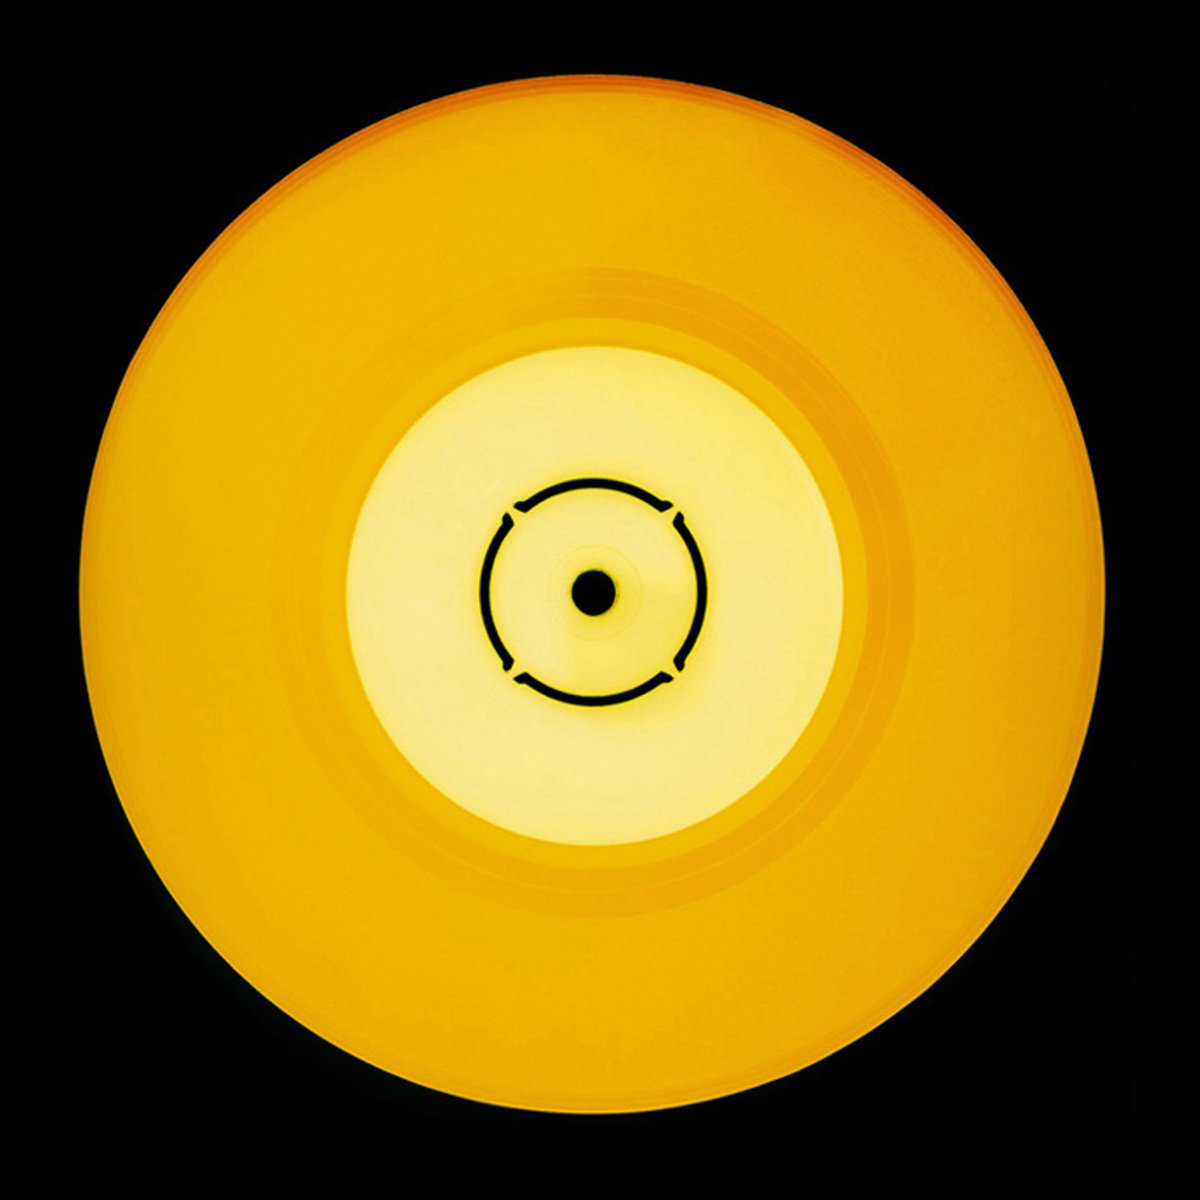 Heidler & Heeps Vinyl Collection ’Double B Side’ (Sunshine) by Richard Heeps